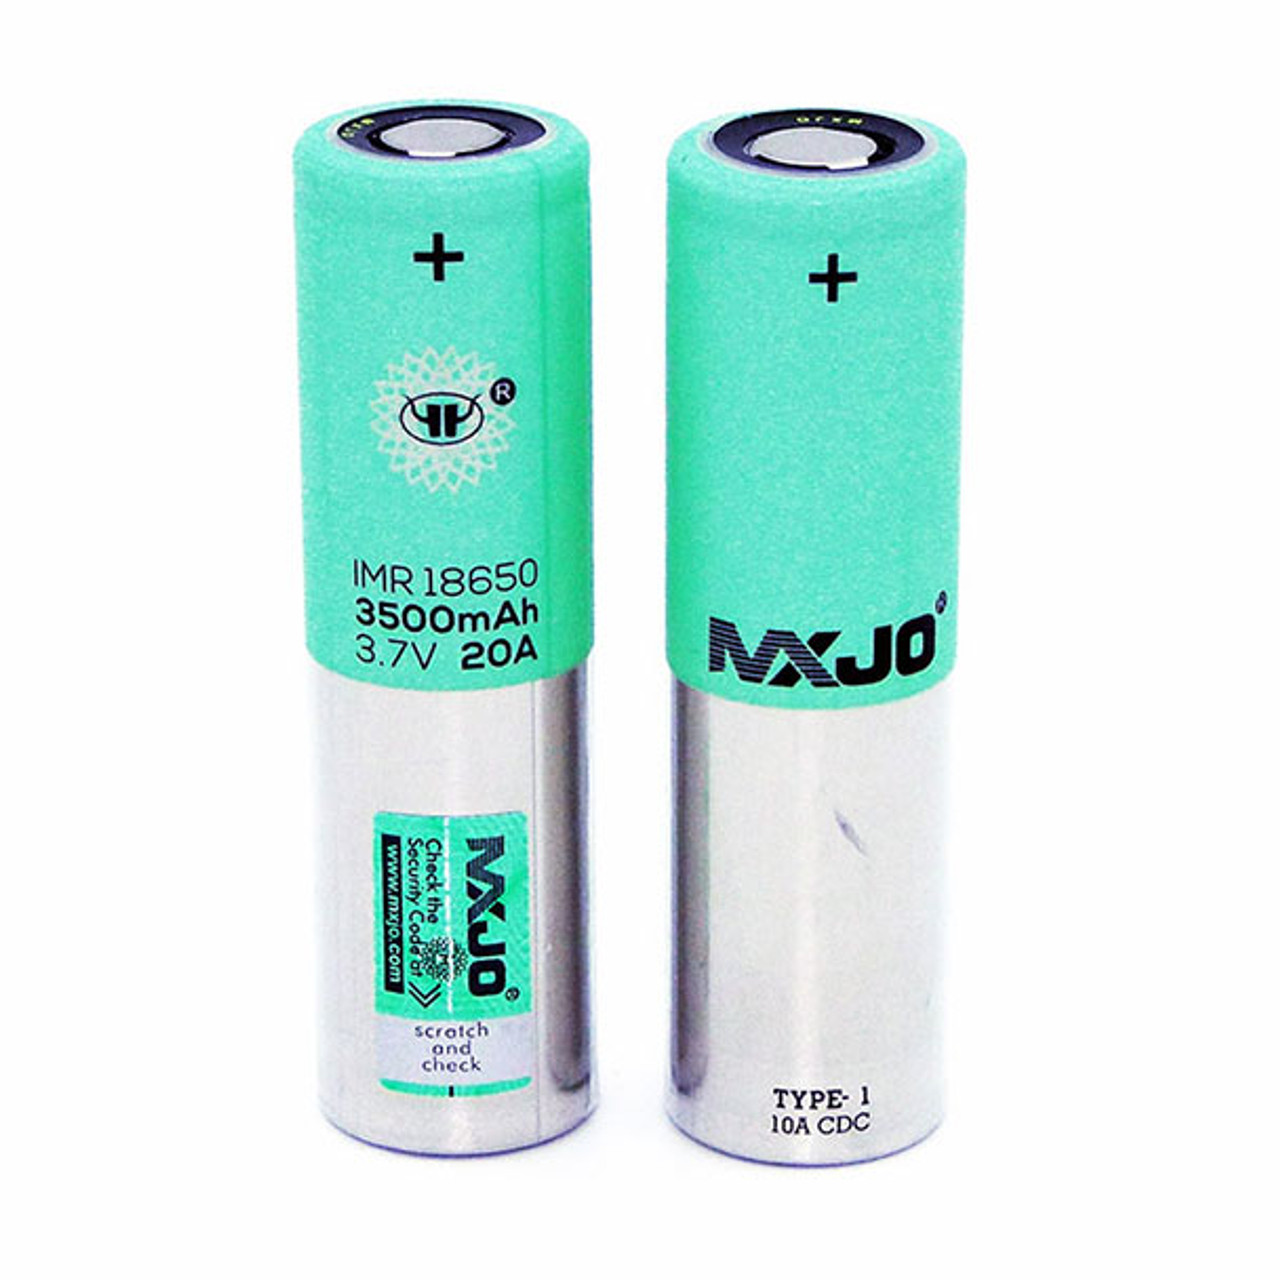 MXJO 3500mAh 18650 Battery (Green) (Bulk Discount Available)